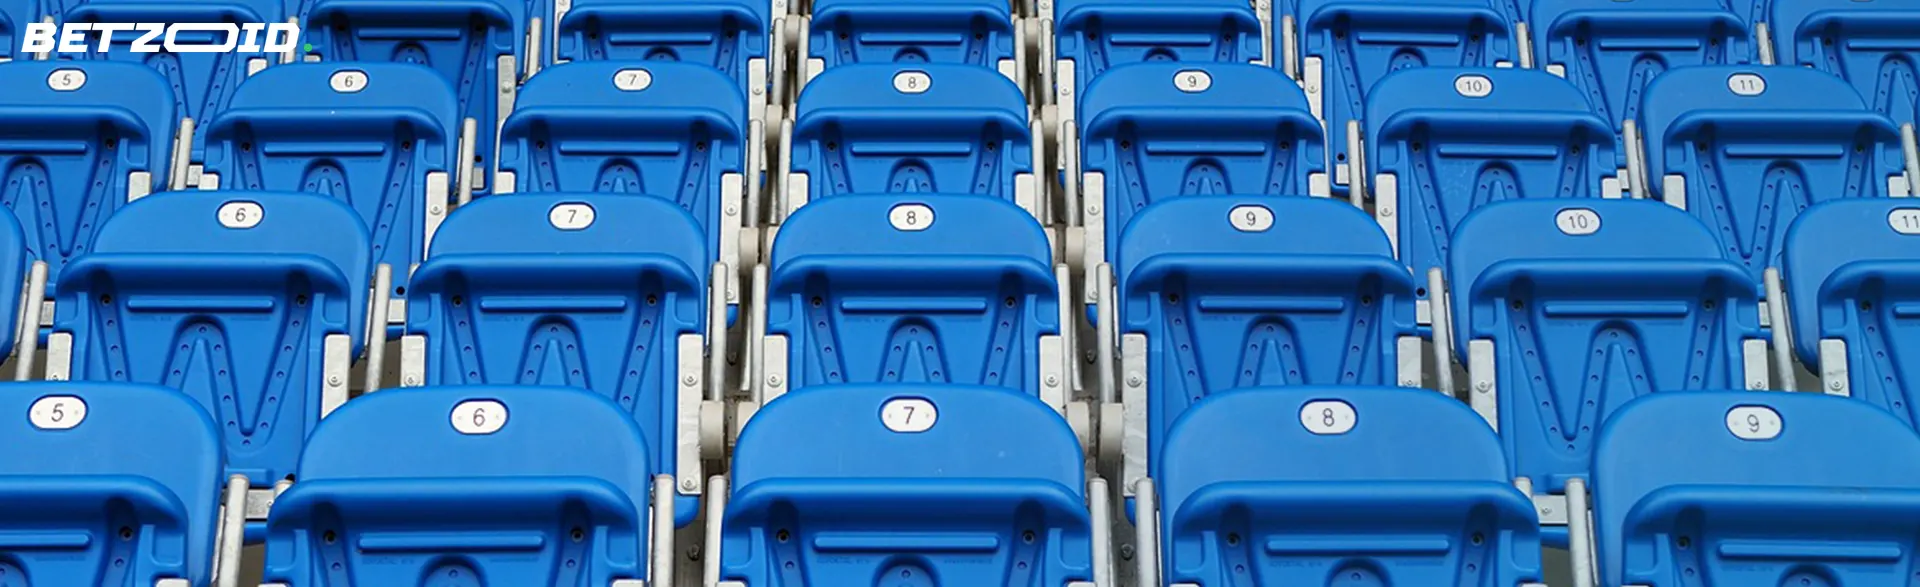 Blue stadium seats with numbered backs.